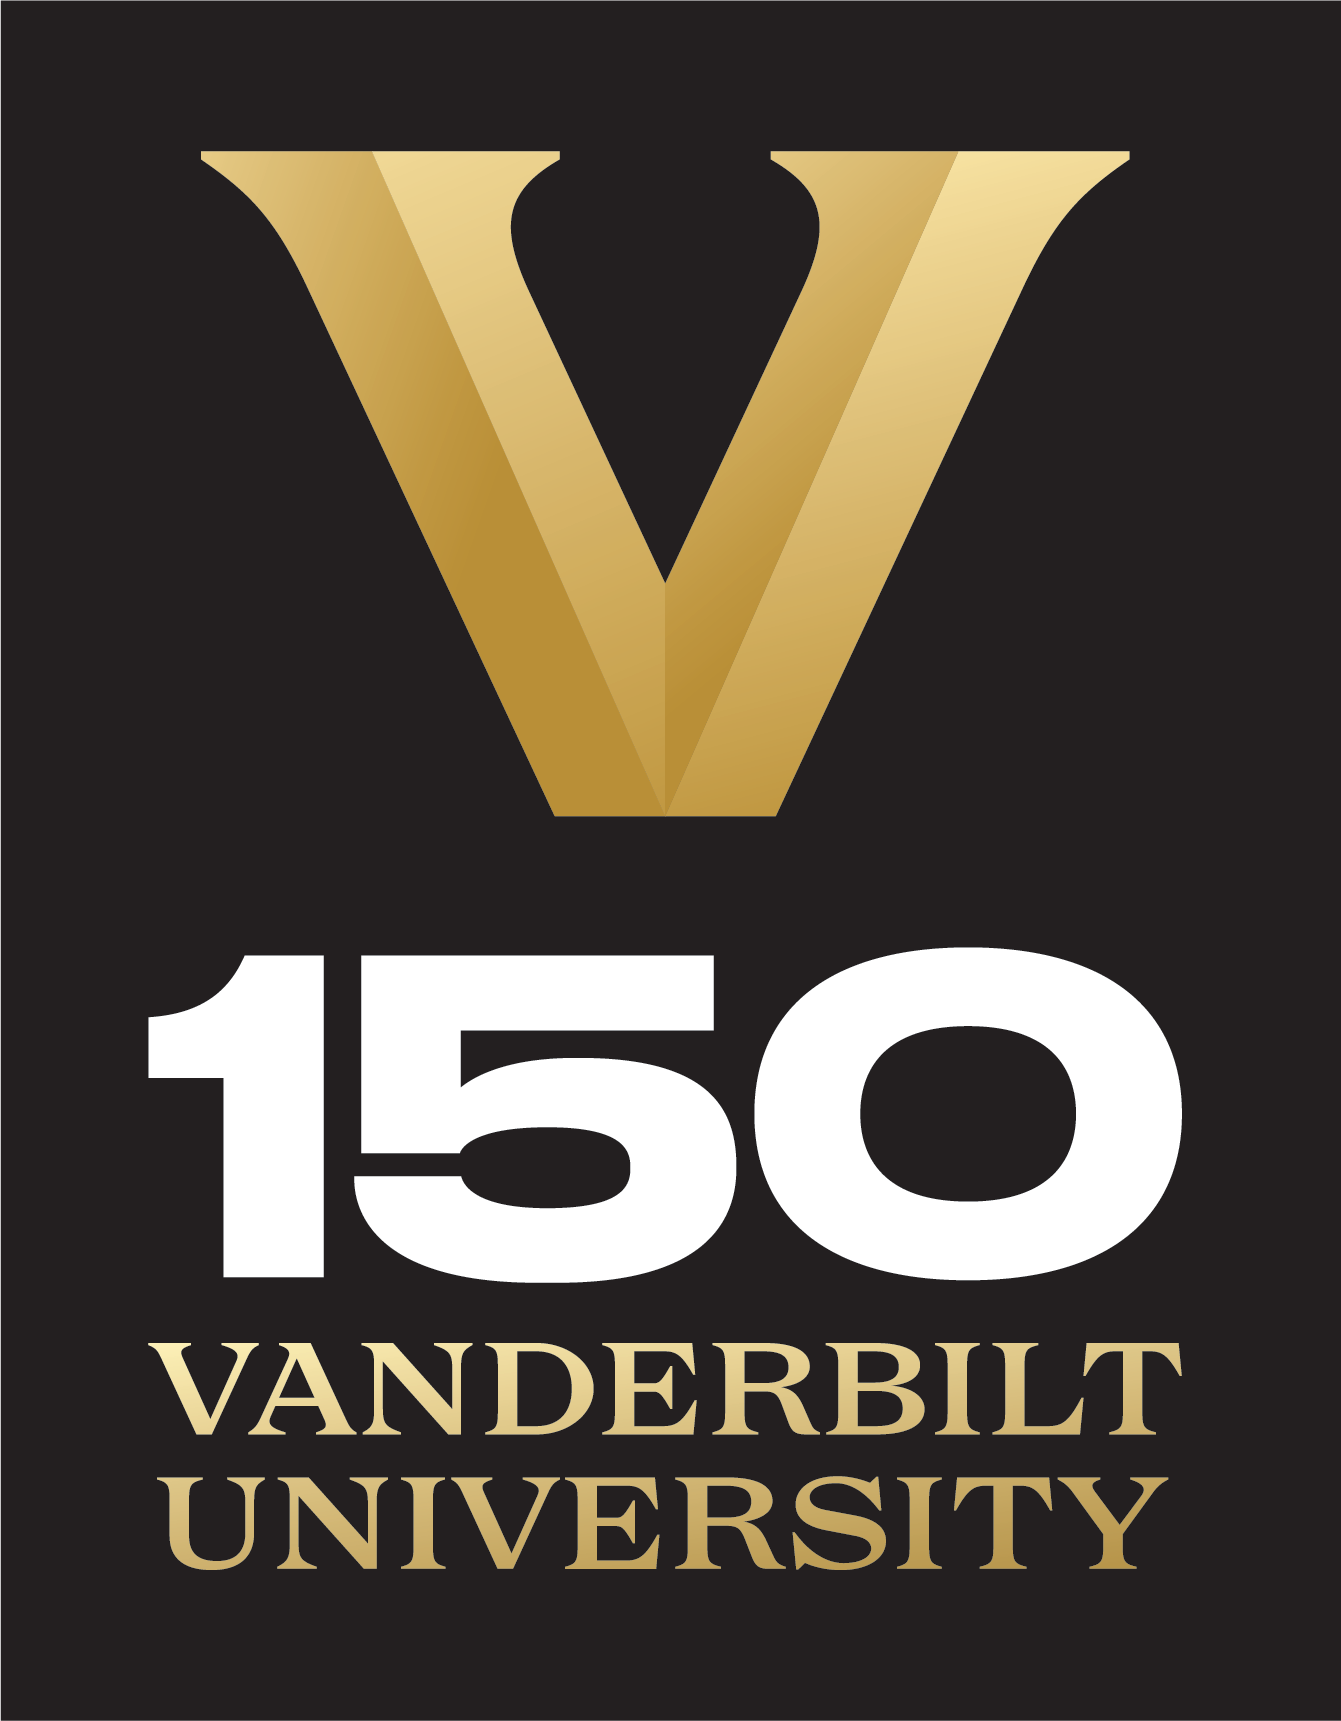 Vanderbilt_Univ_Sesqui_logo_Vst.png